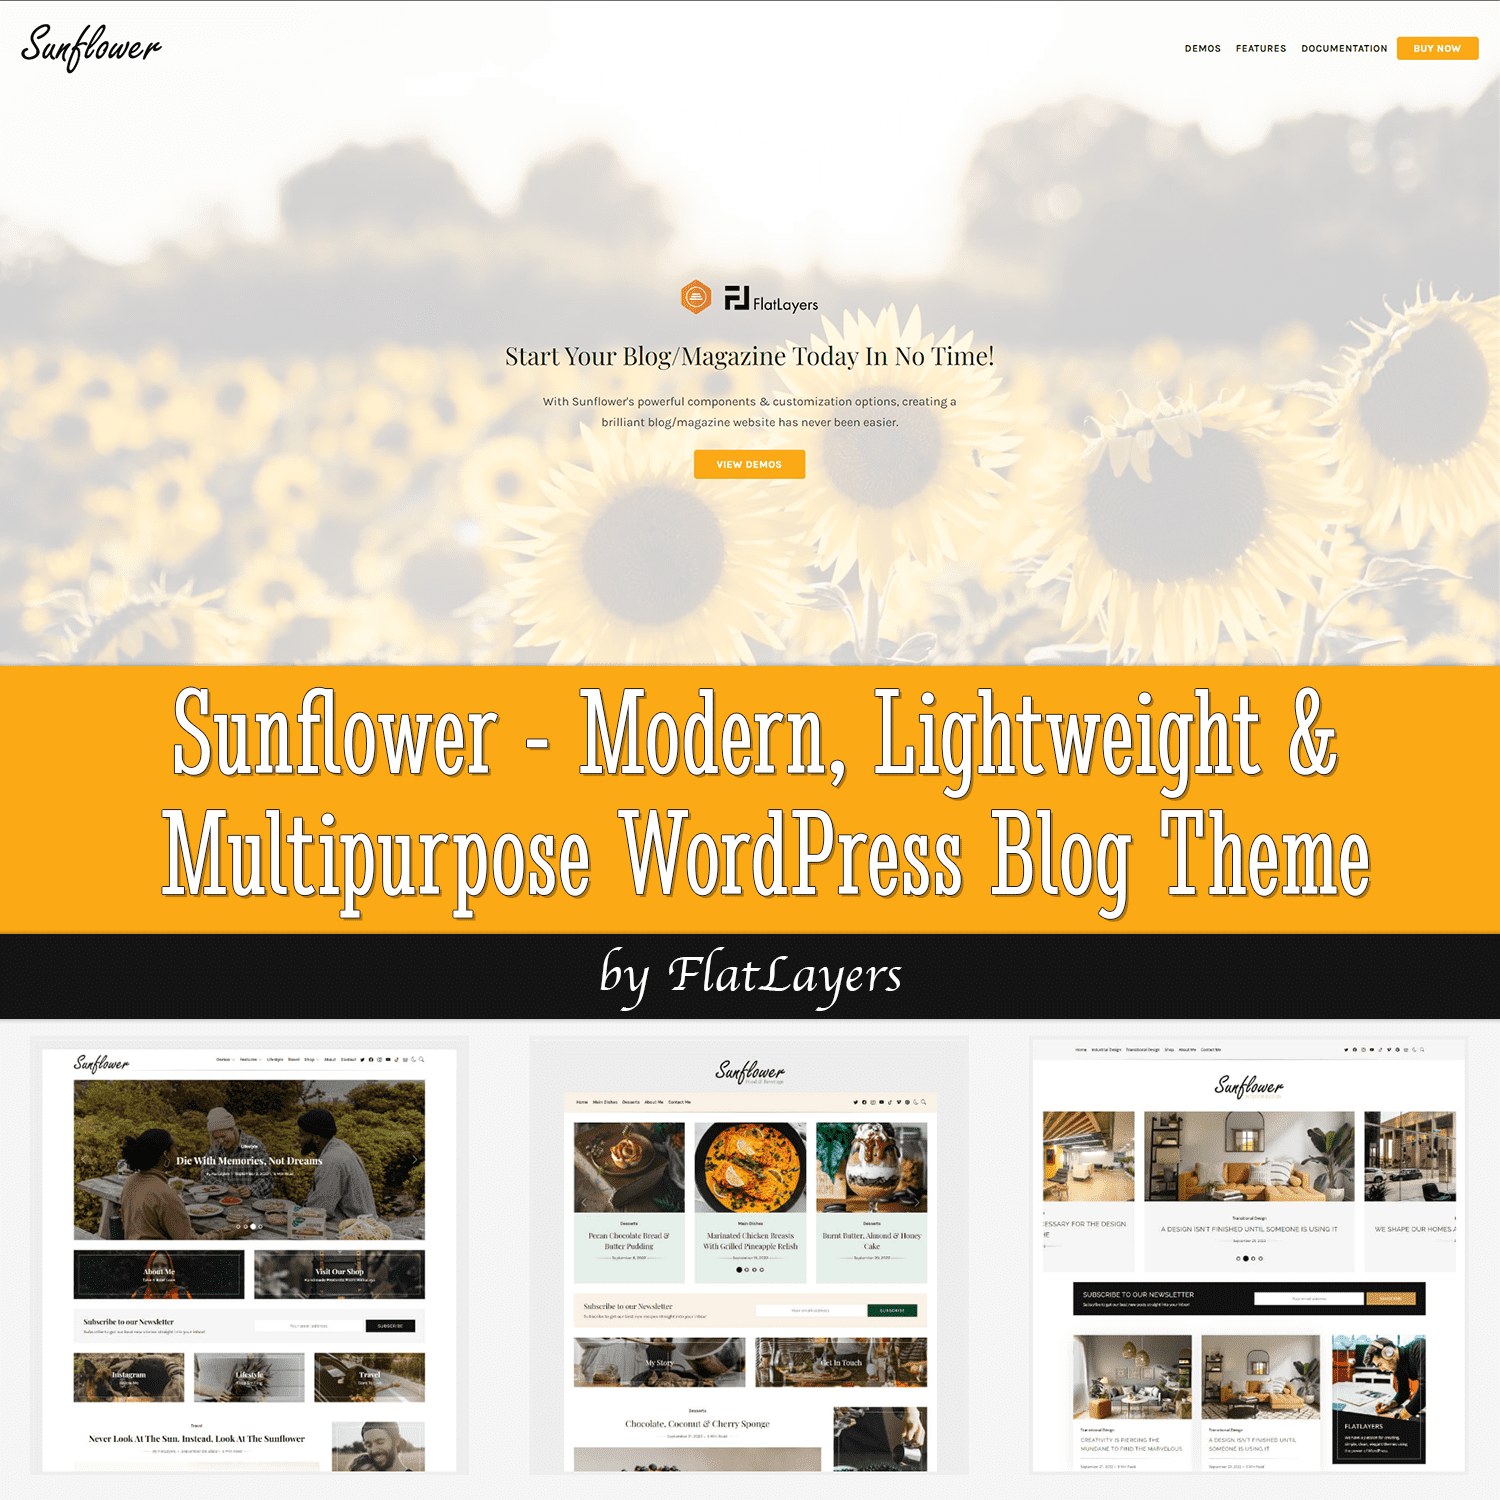 Sunflower - Modern, Lightweight & Multipurpose WordPress Blog Theme cover.